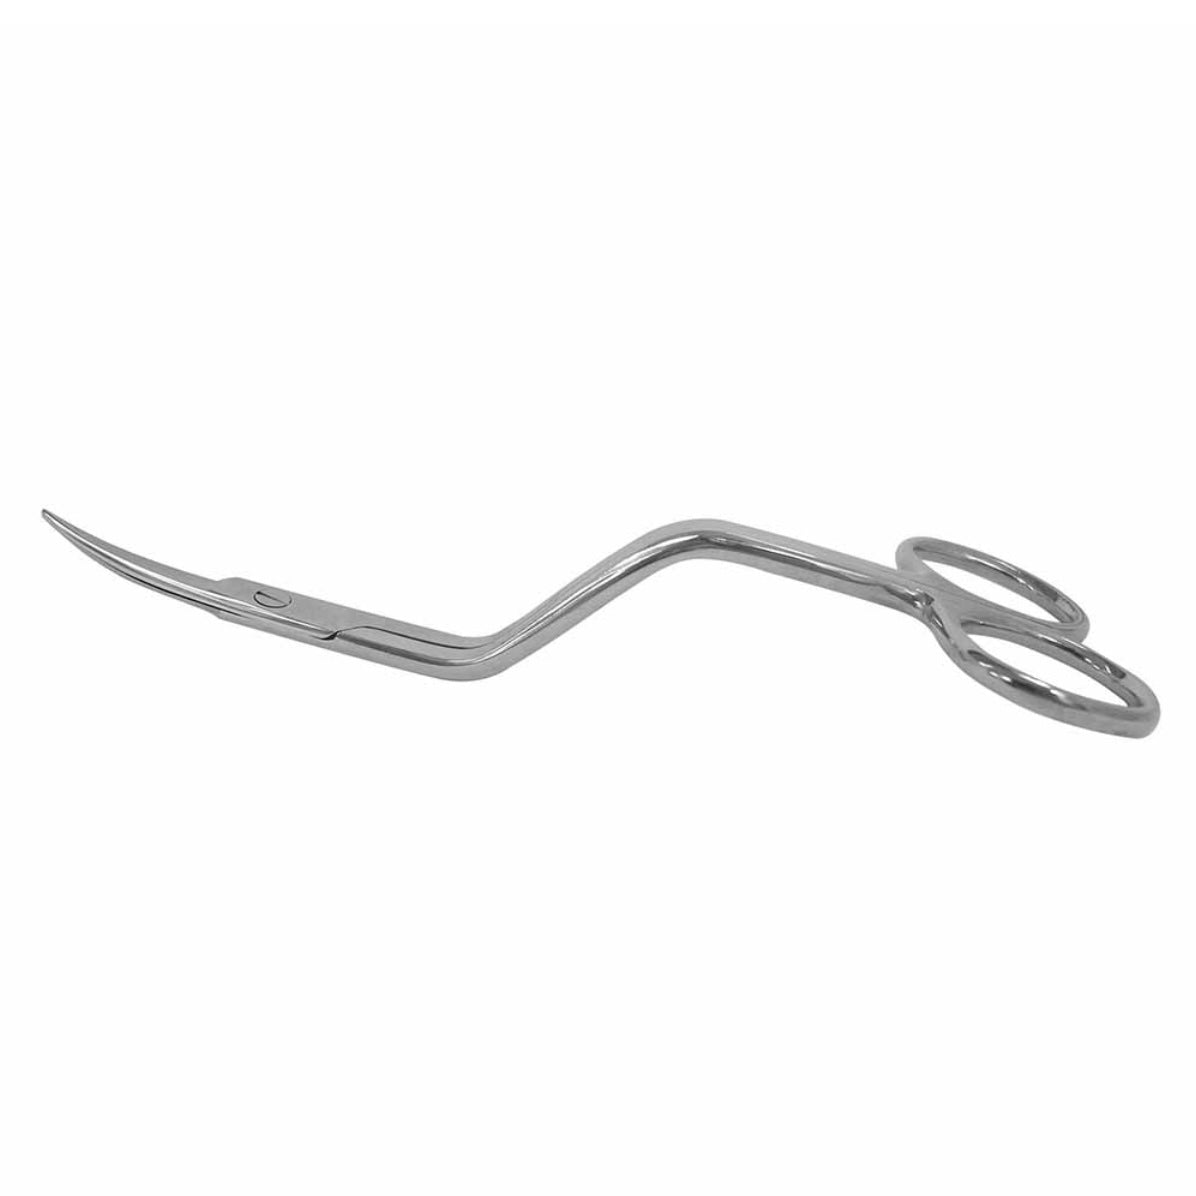 Angled Scissors - 5 1/4”